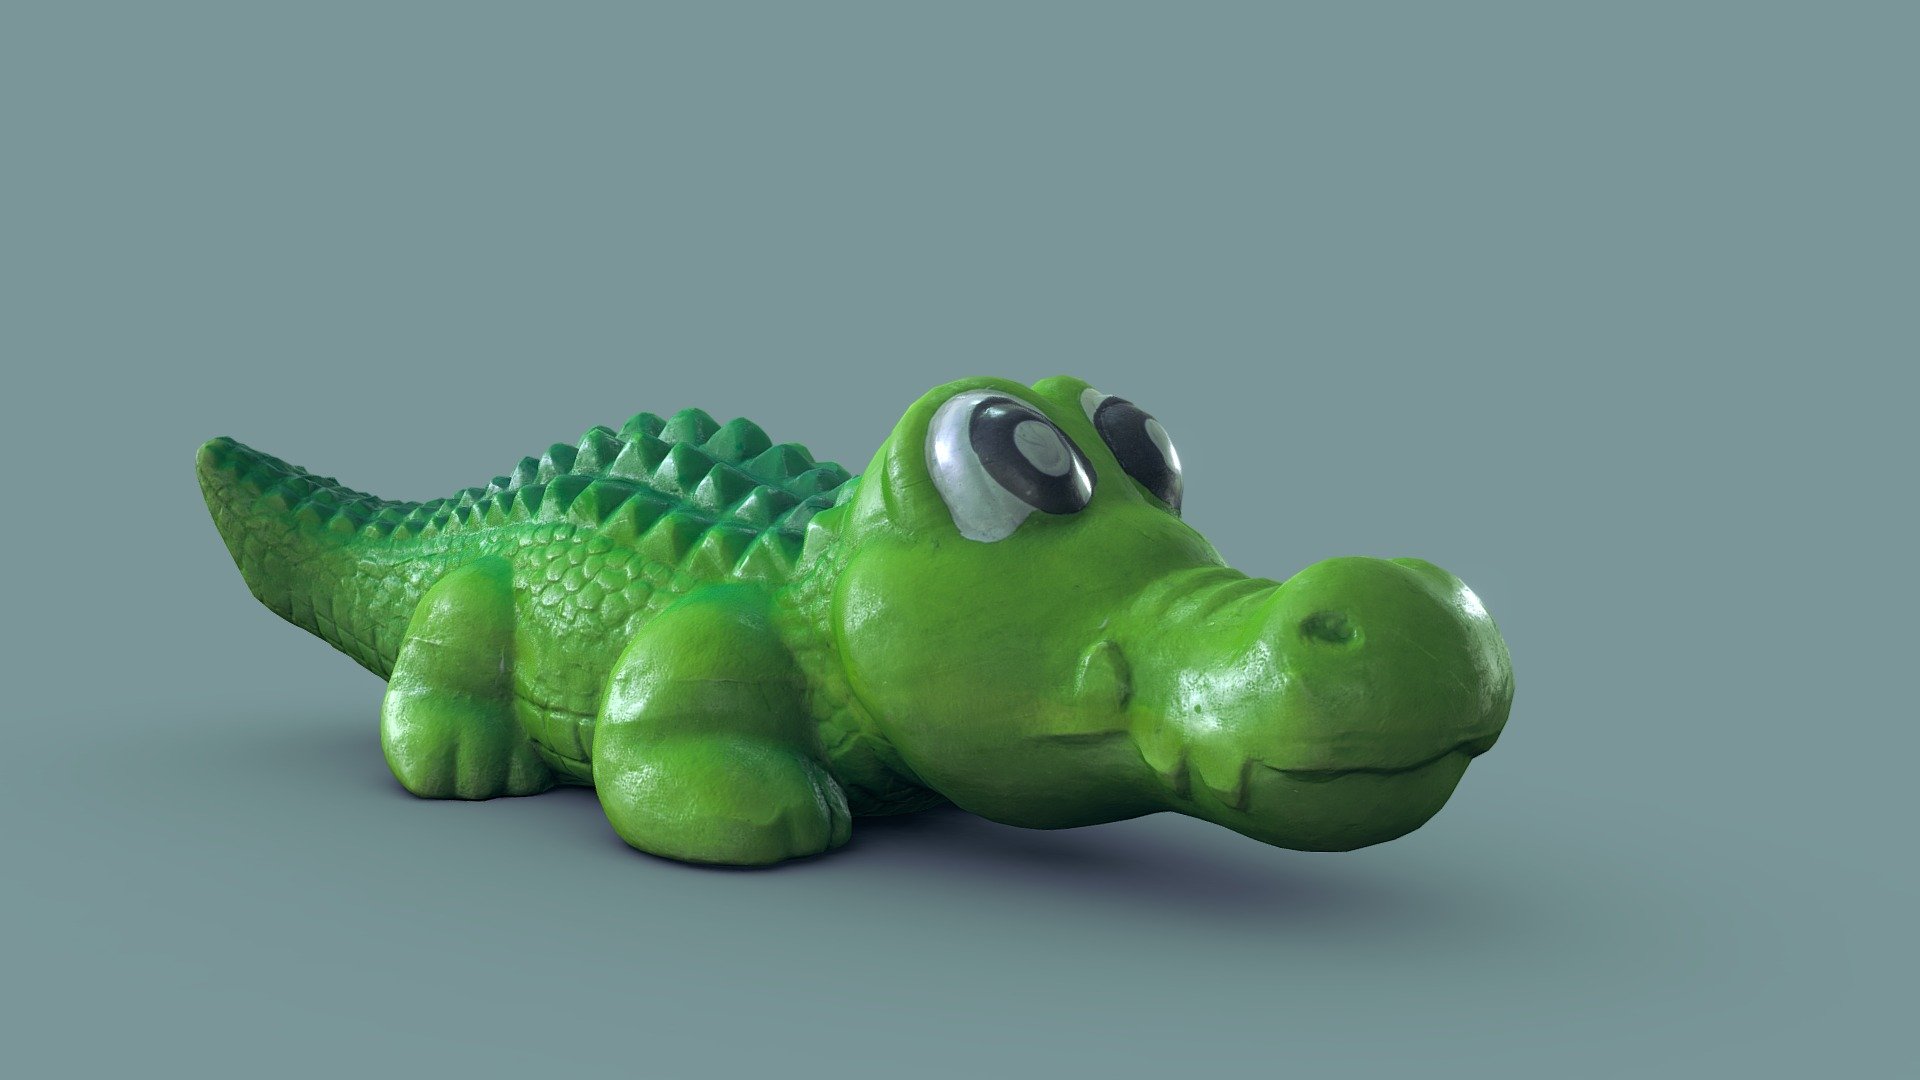 My dog's toy 3d scanned - Crocodile dog toy 3D scan - Download Free 3D model by LukaszRyz 3d model